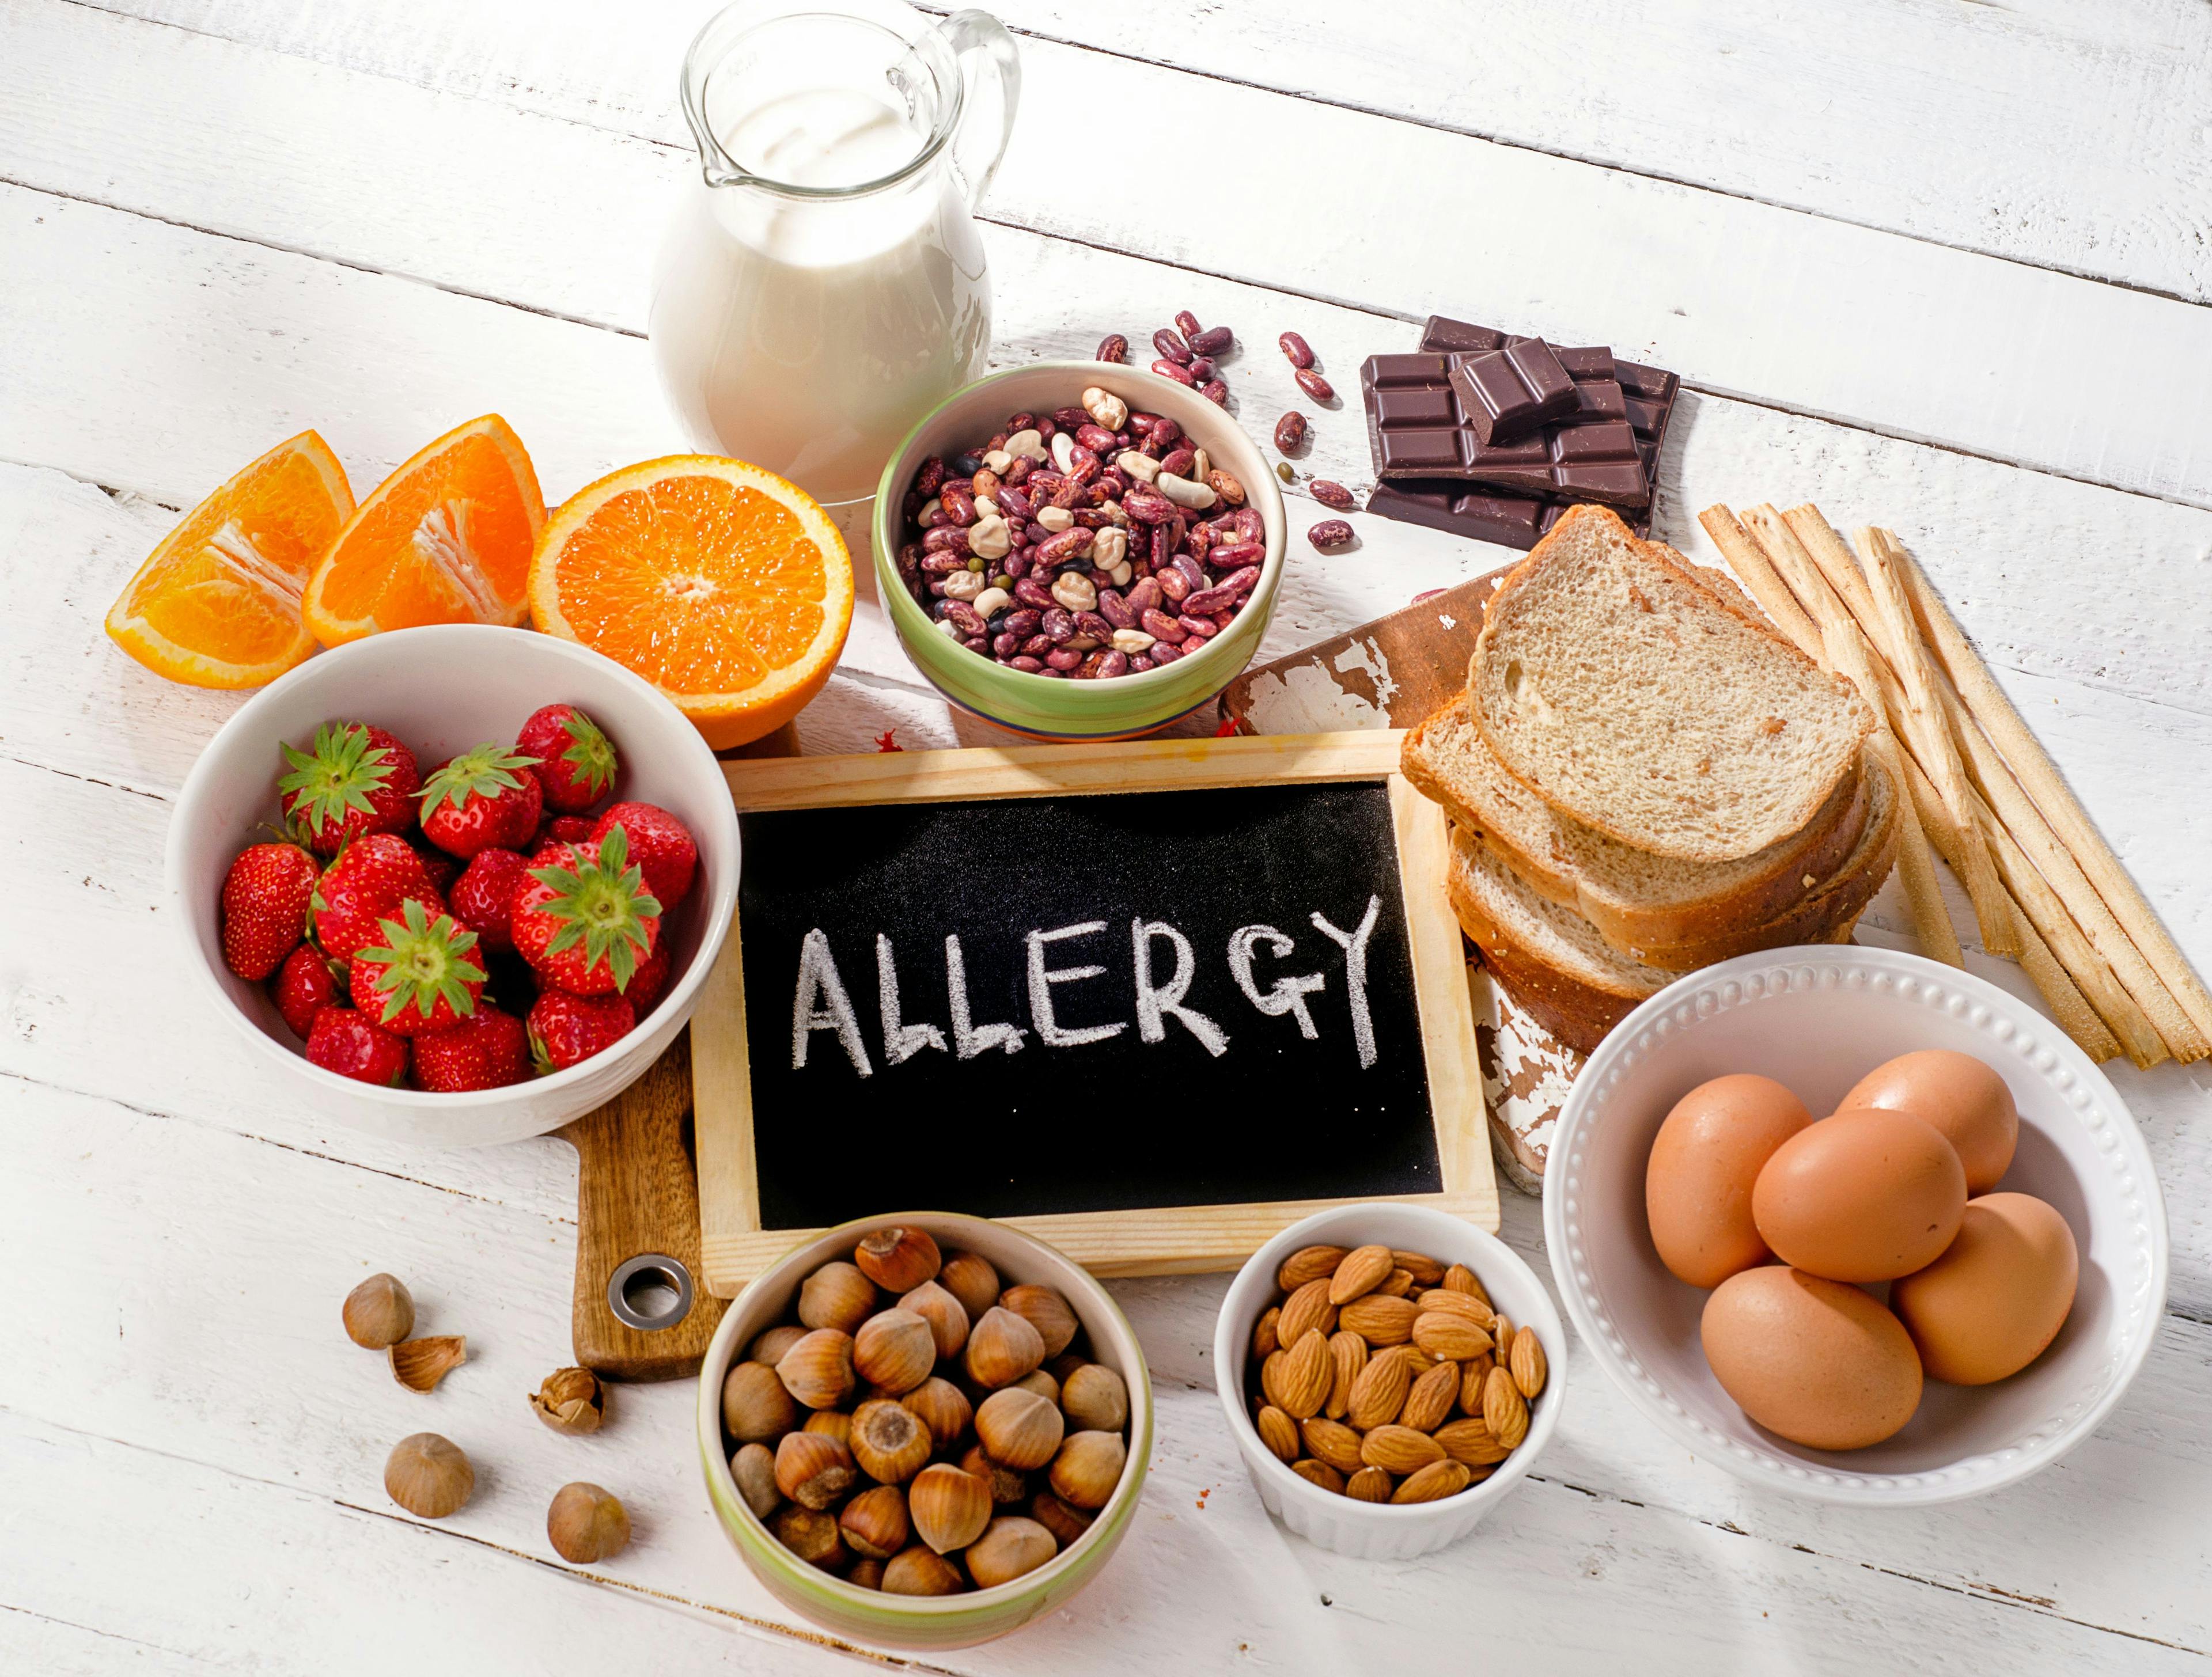 Slideshow: Mental Health Burden of Food Allergy, Nutritional Intervention May Help Children